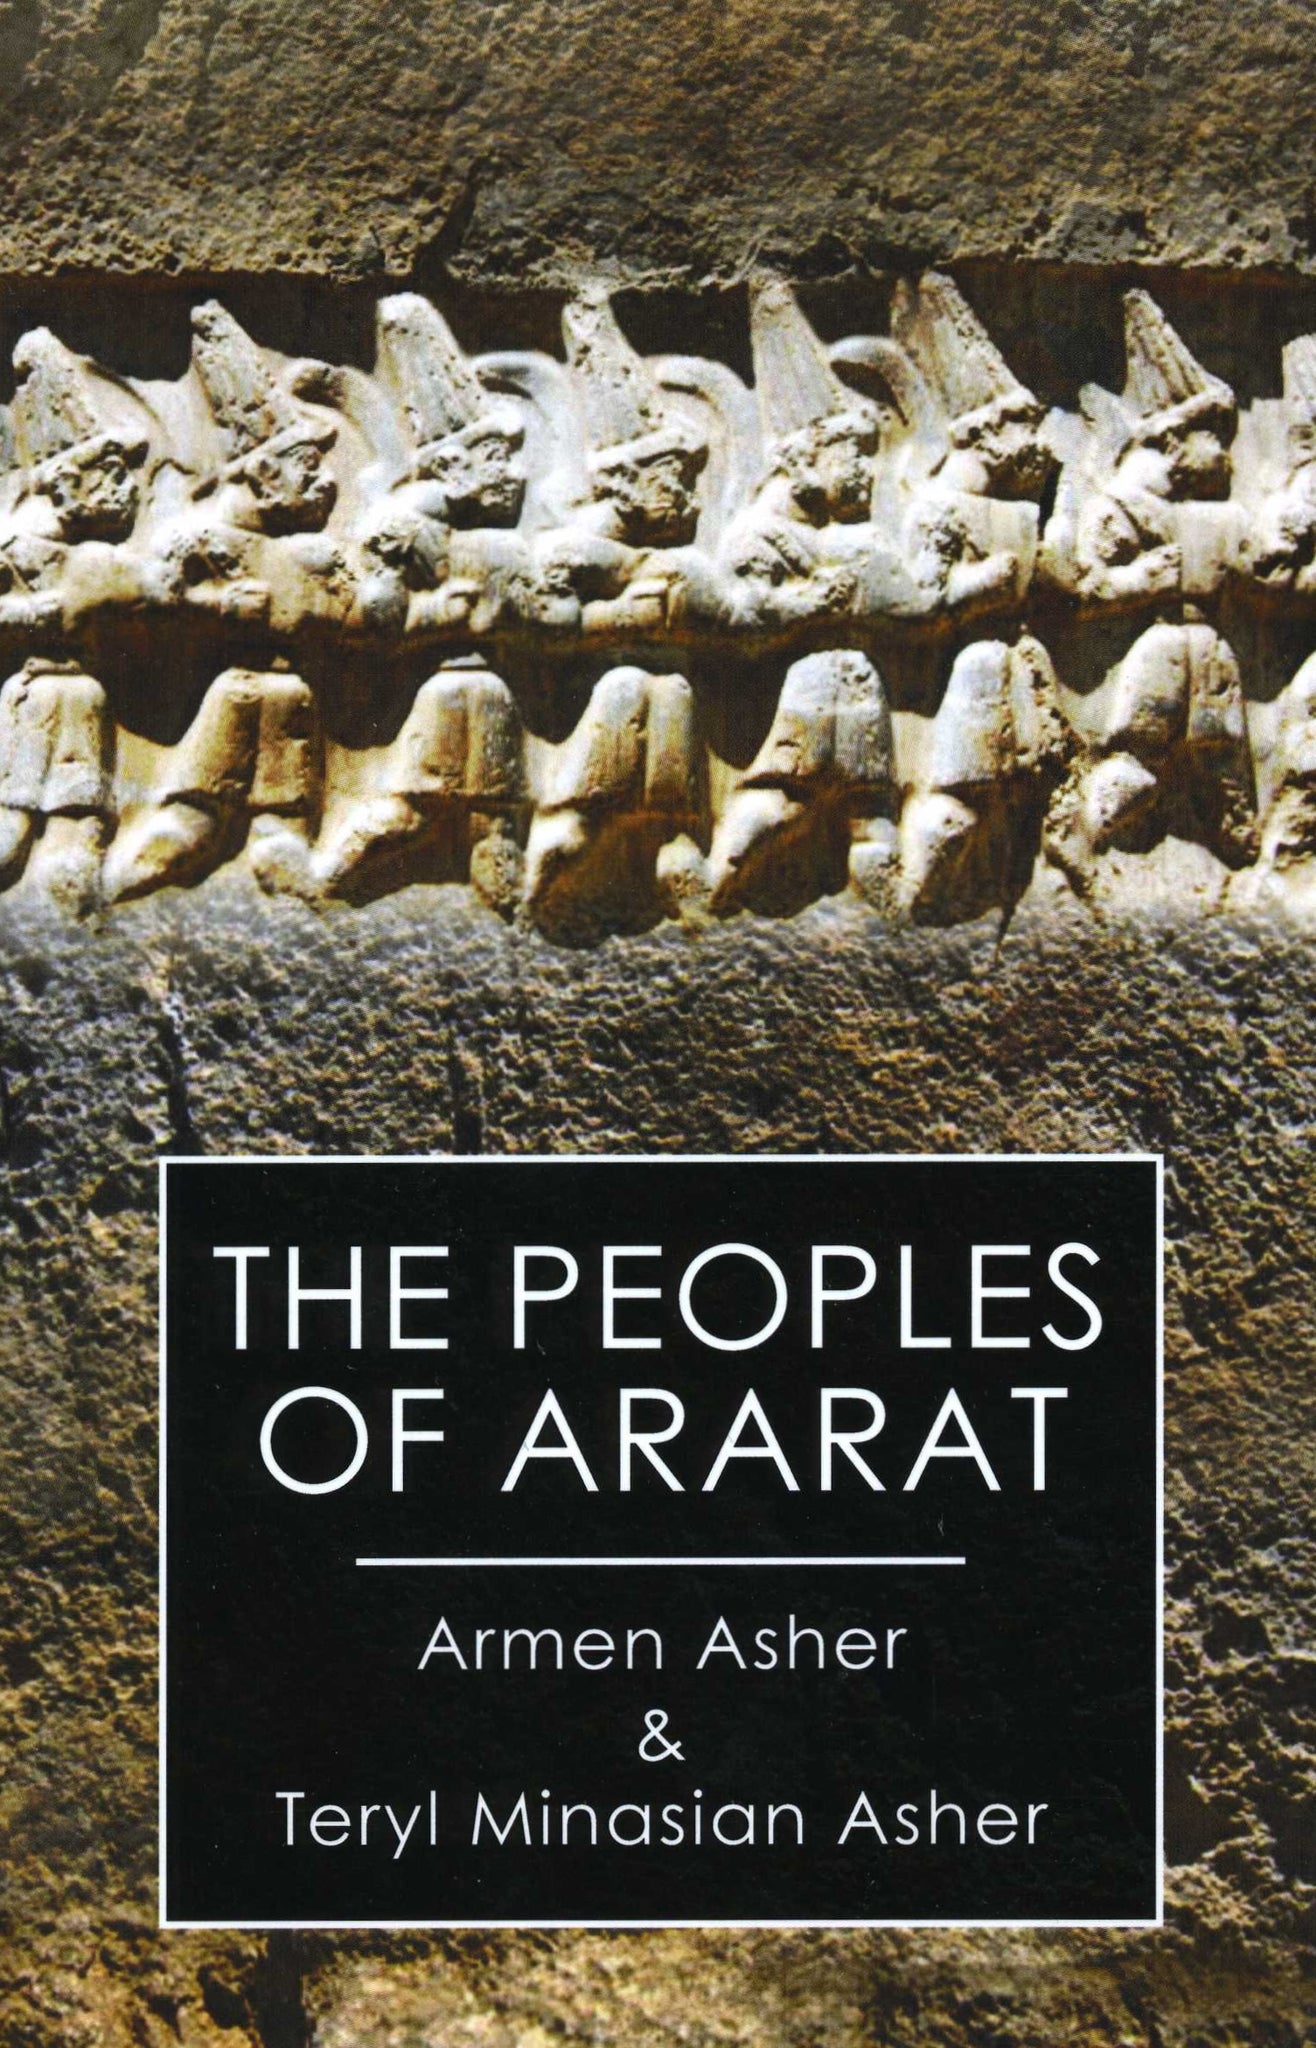 THE PEOPLES OF ARARAT